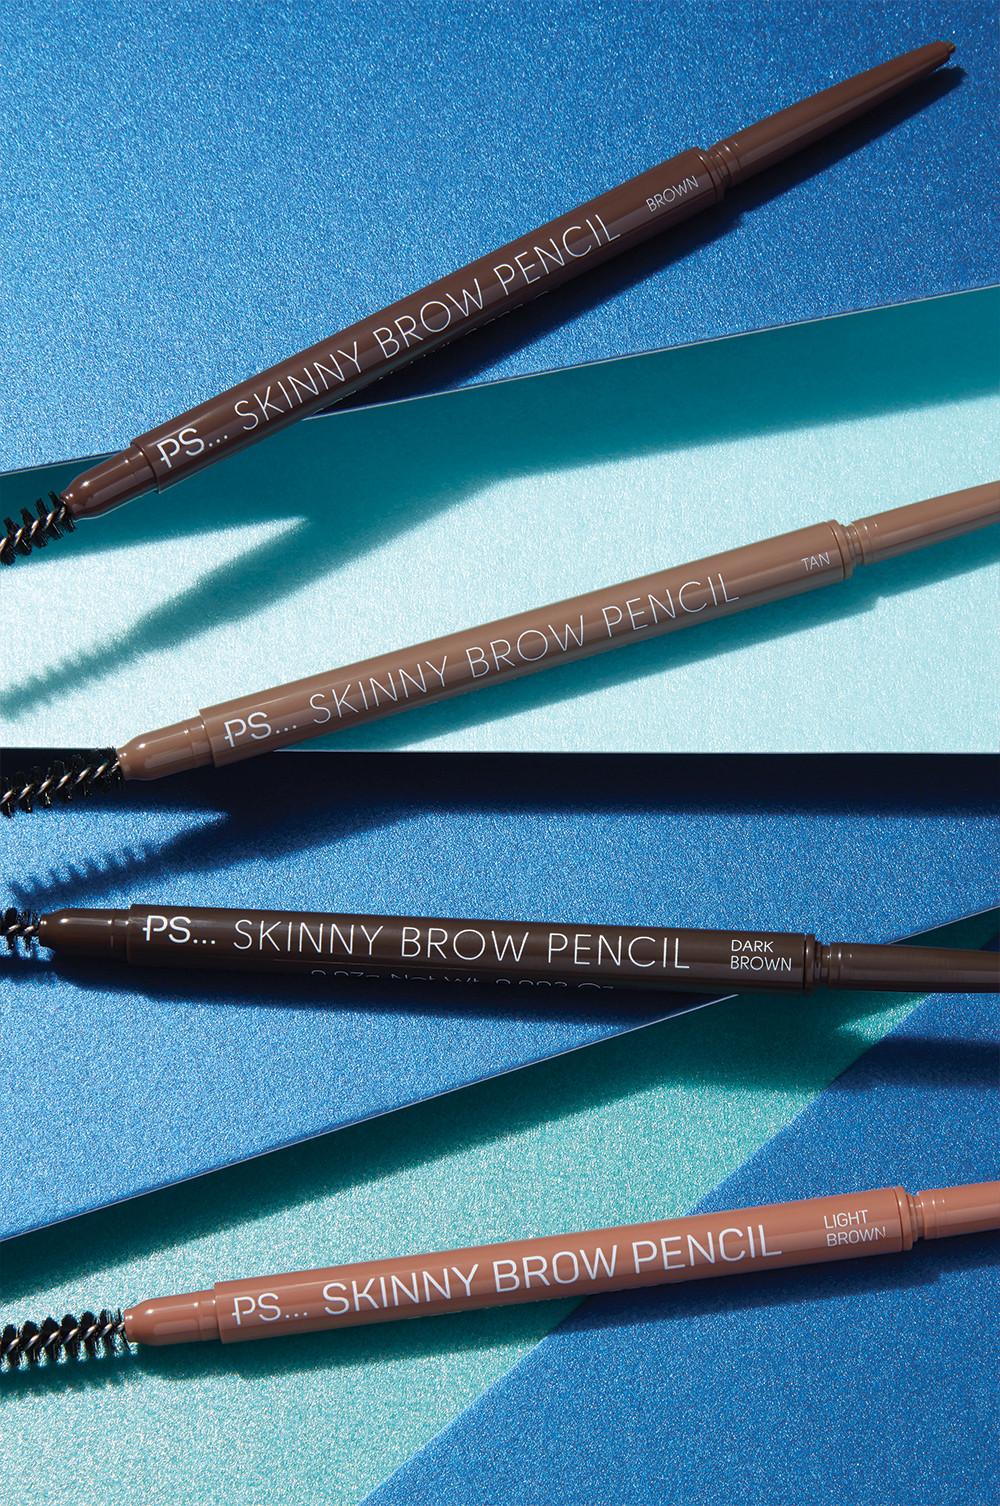 primark skinny brow pencil